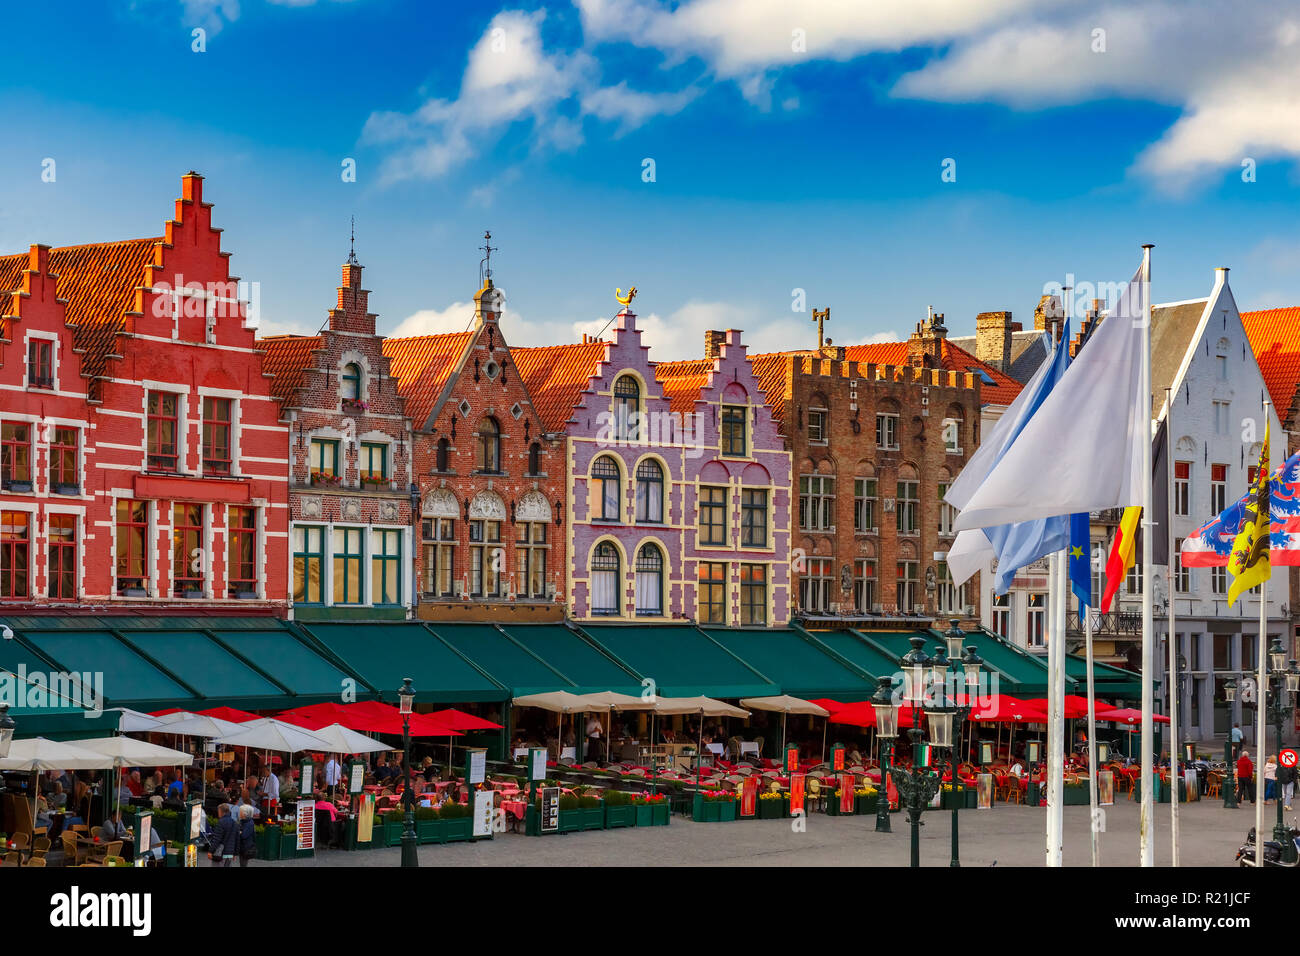 Old Market square in Bruges, Belgium Stock Photo